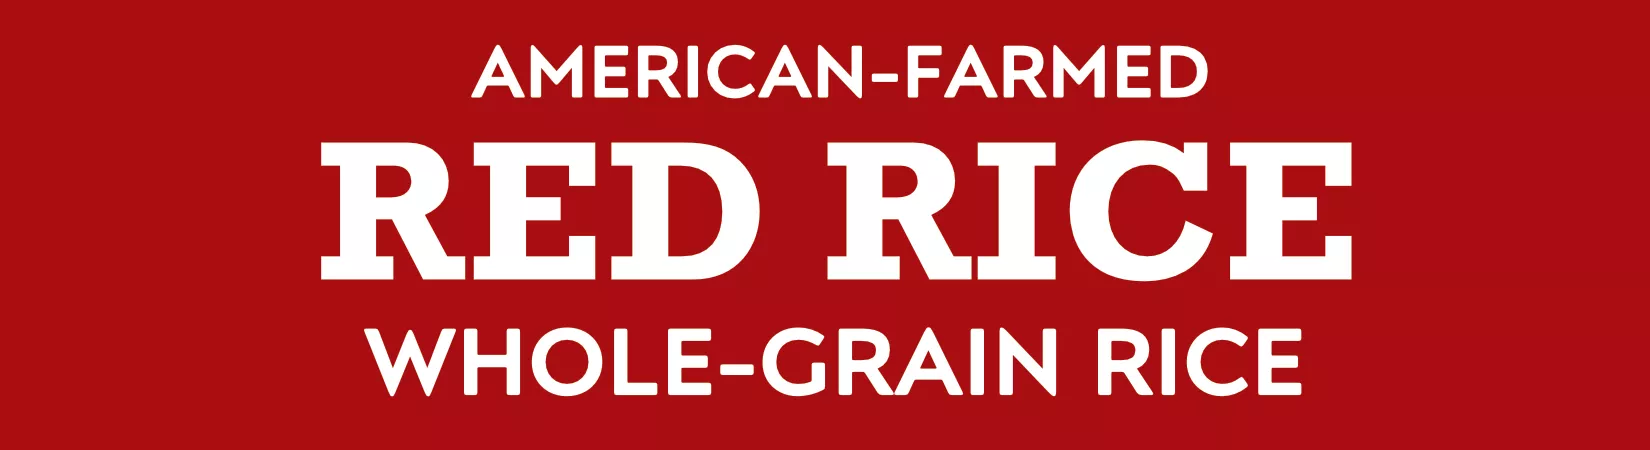 American-farmed red rice whole grain